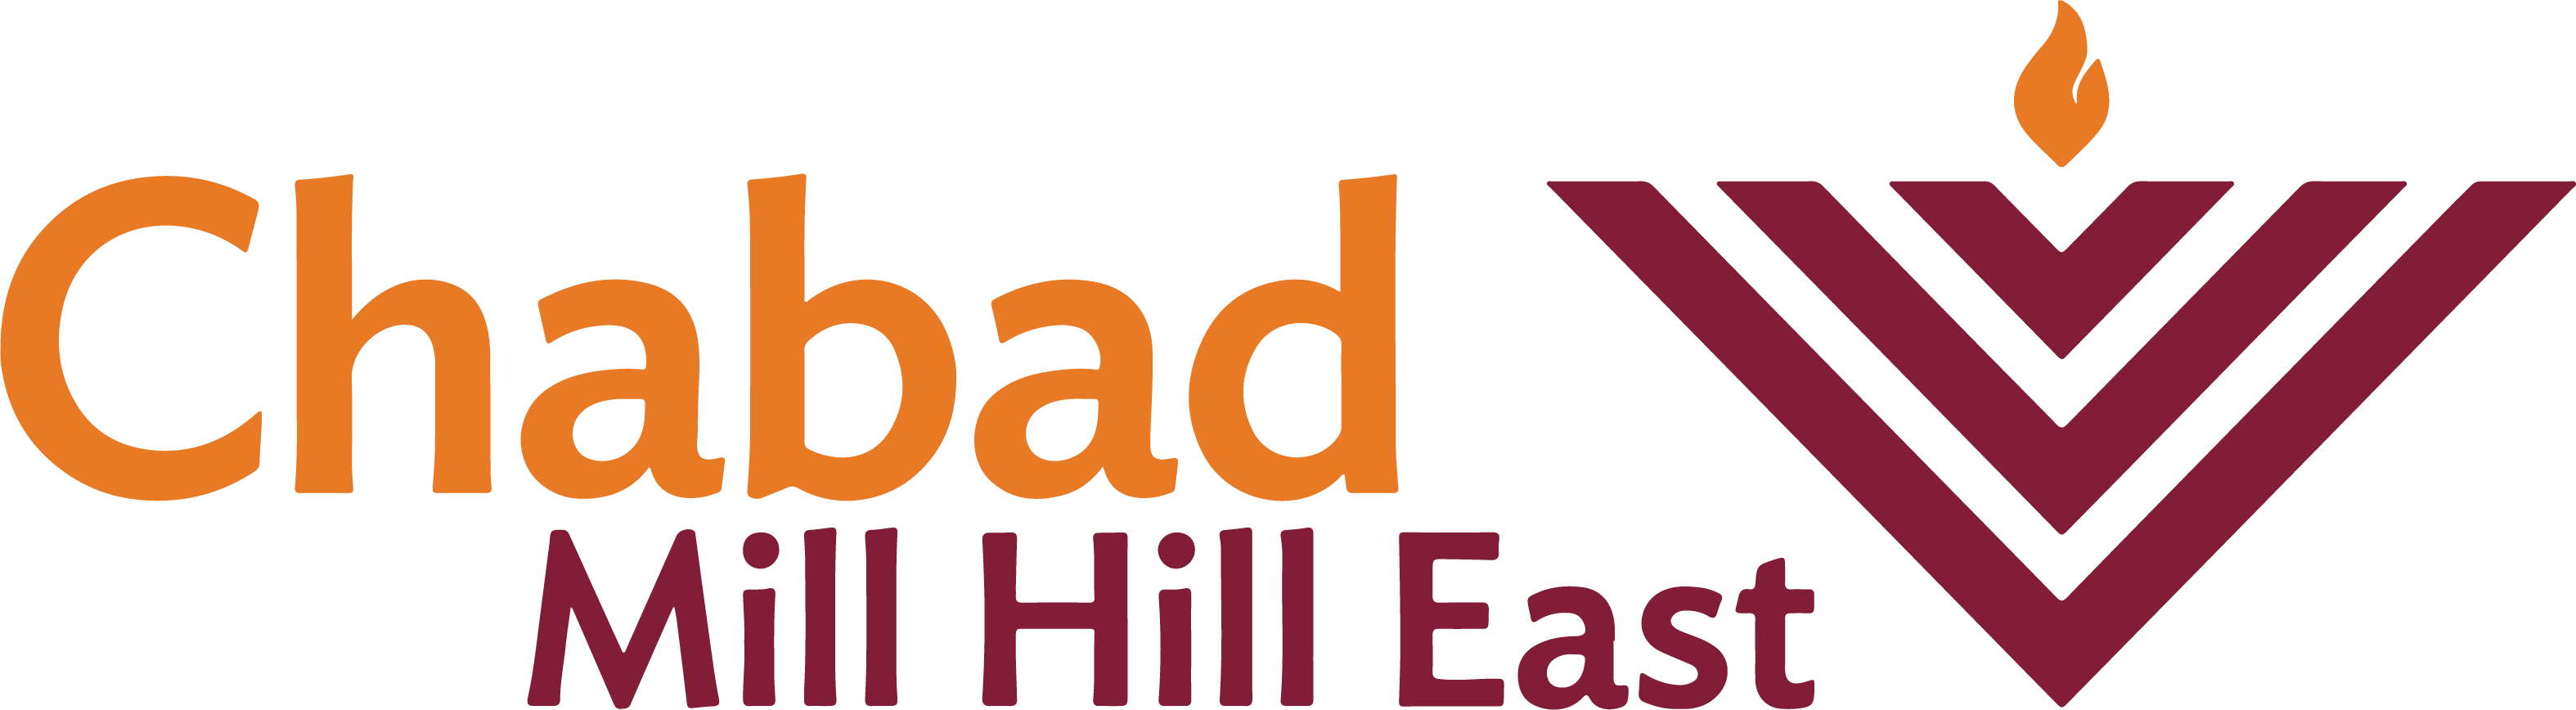 Chabad Mill Hill Logo Red orange